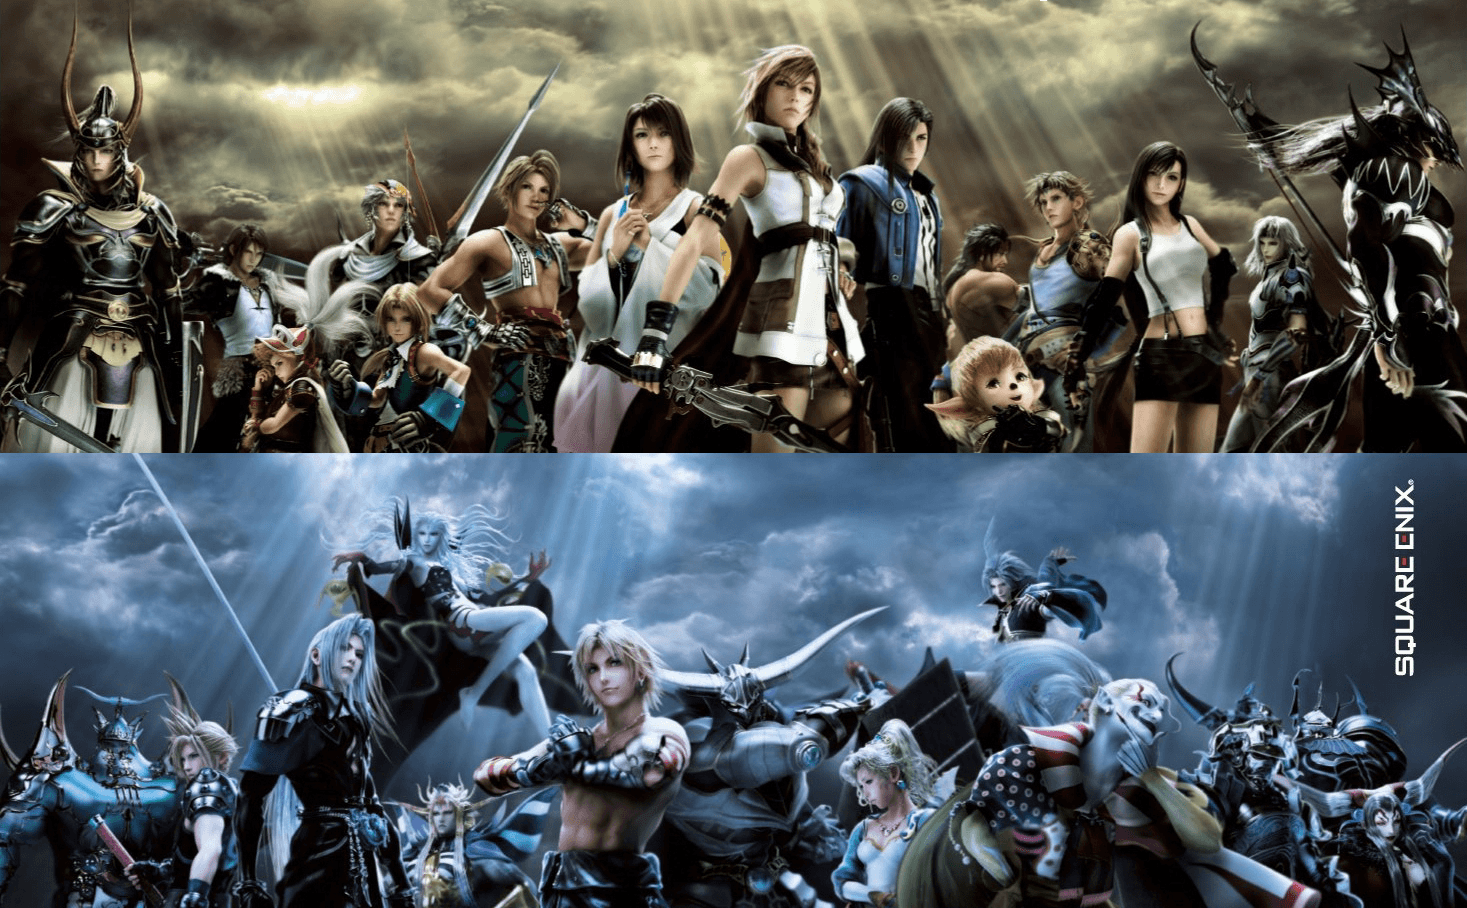 Final Fantasy HD Wallpaper: Final Fantasy Dissidia 012 Duodecim